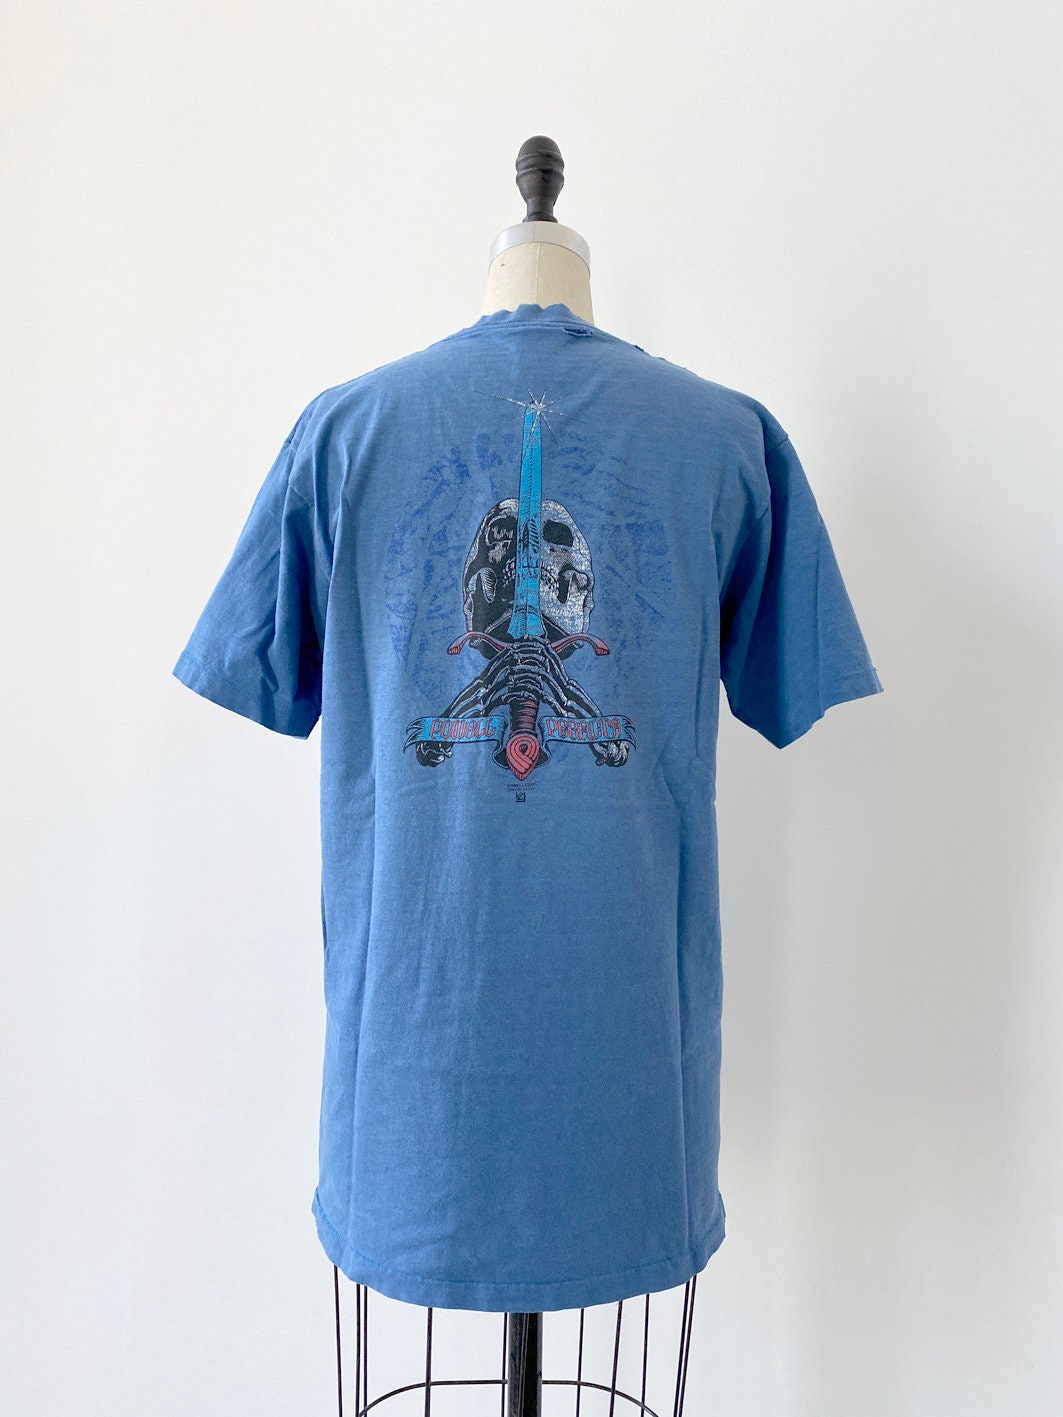 80s Vintage Powell Peralta Skull and Sword Shirt : Skate | Etsy